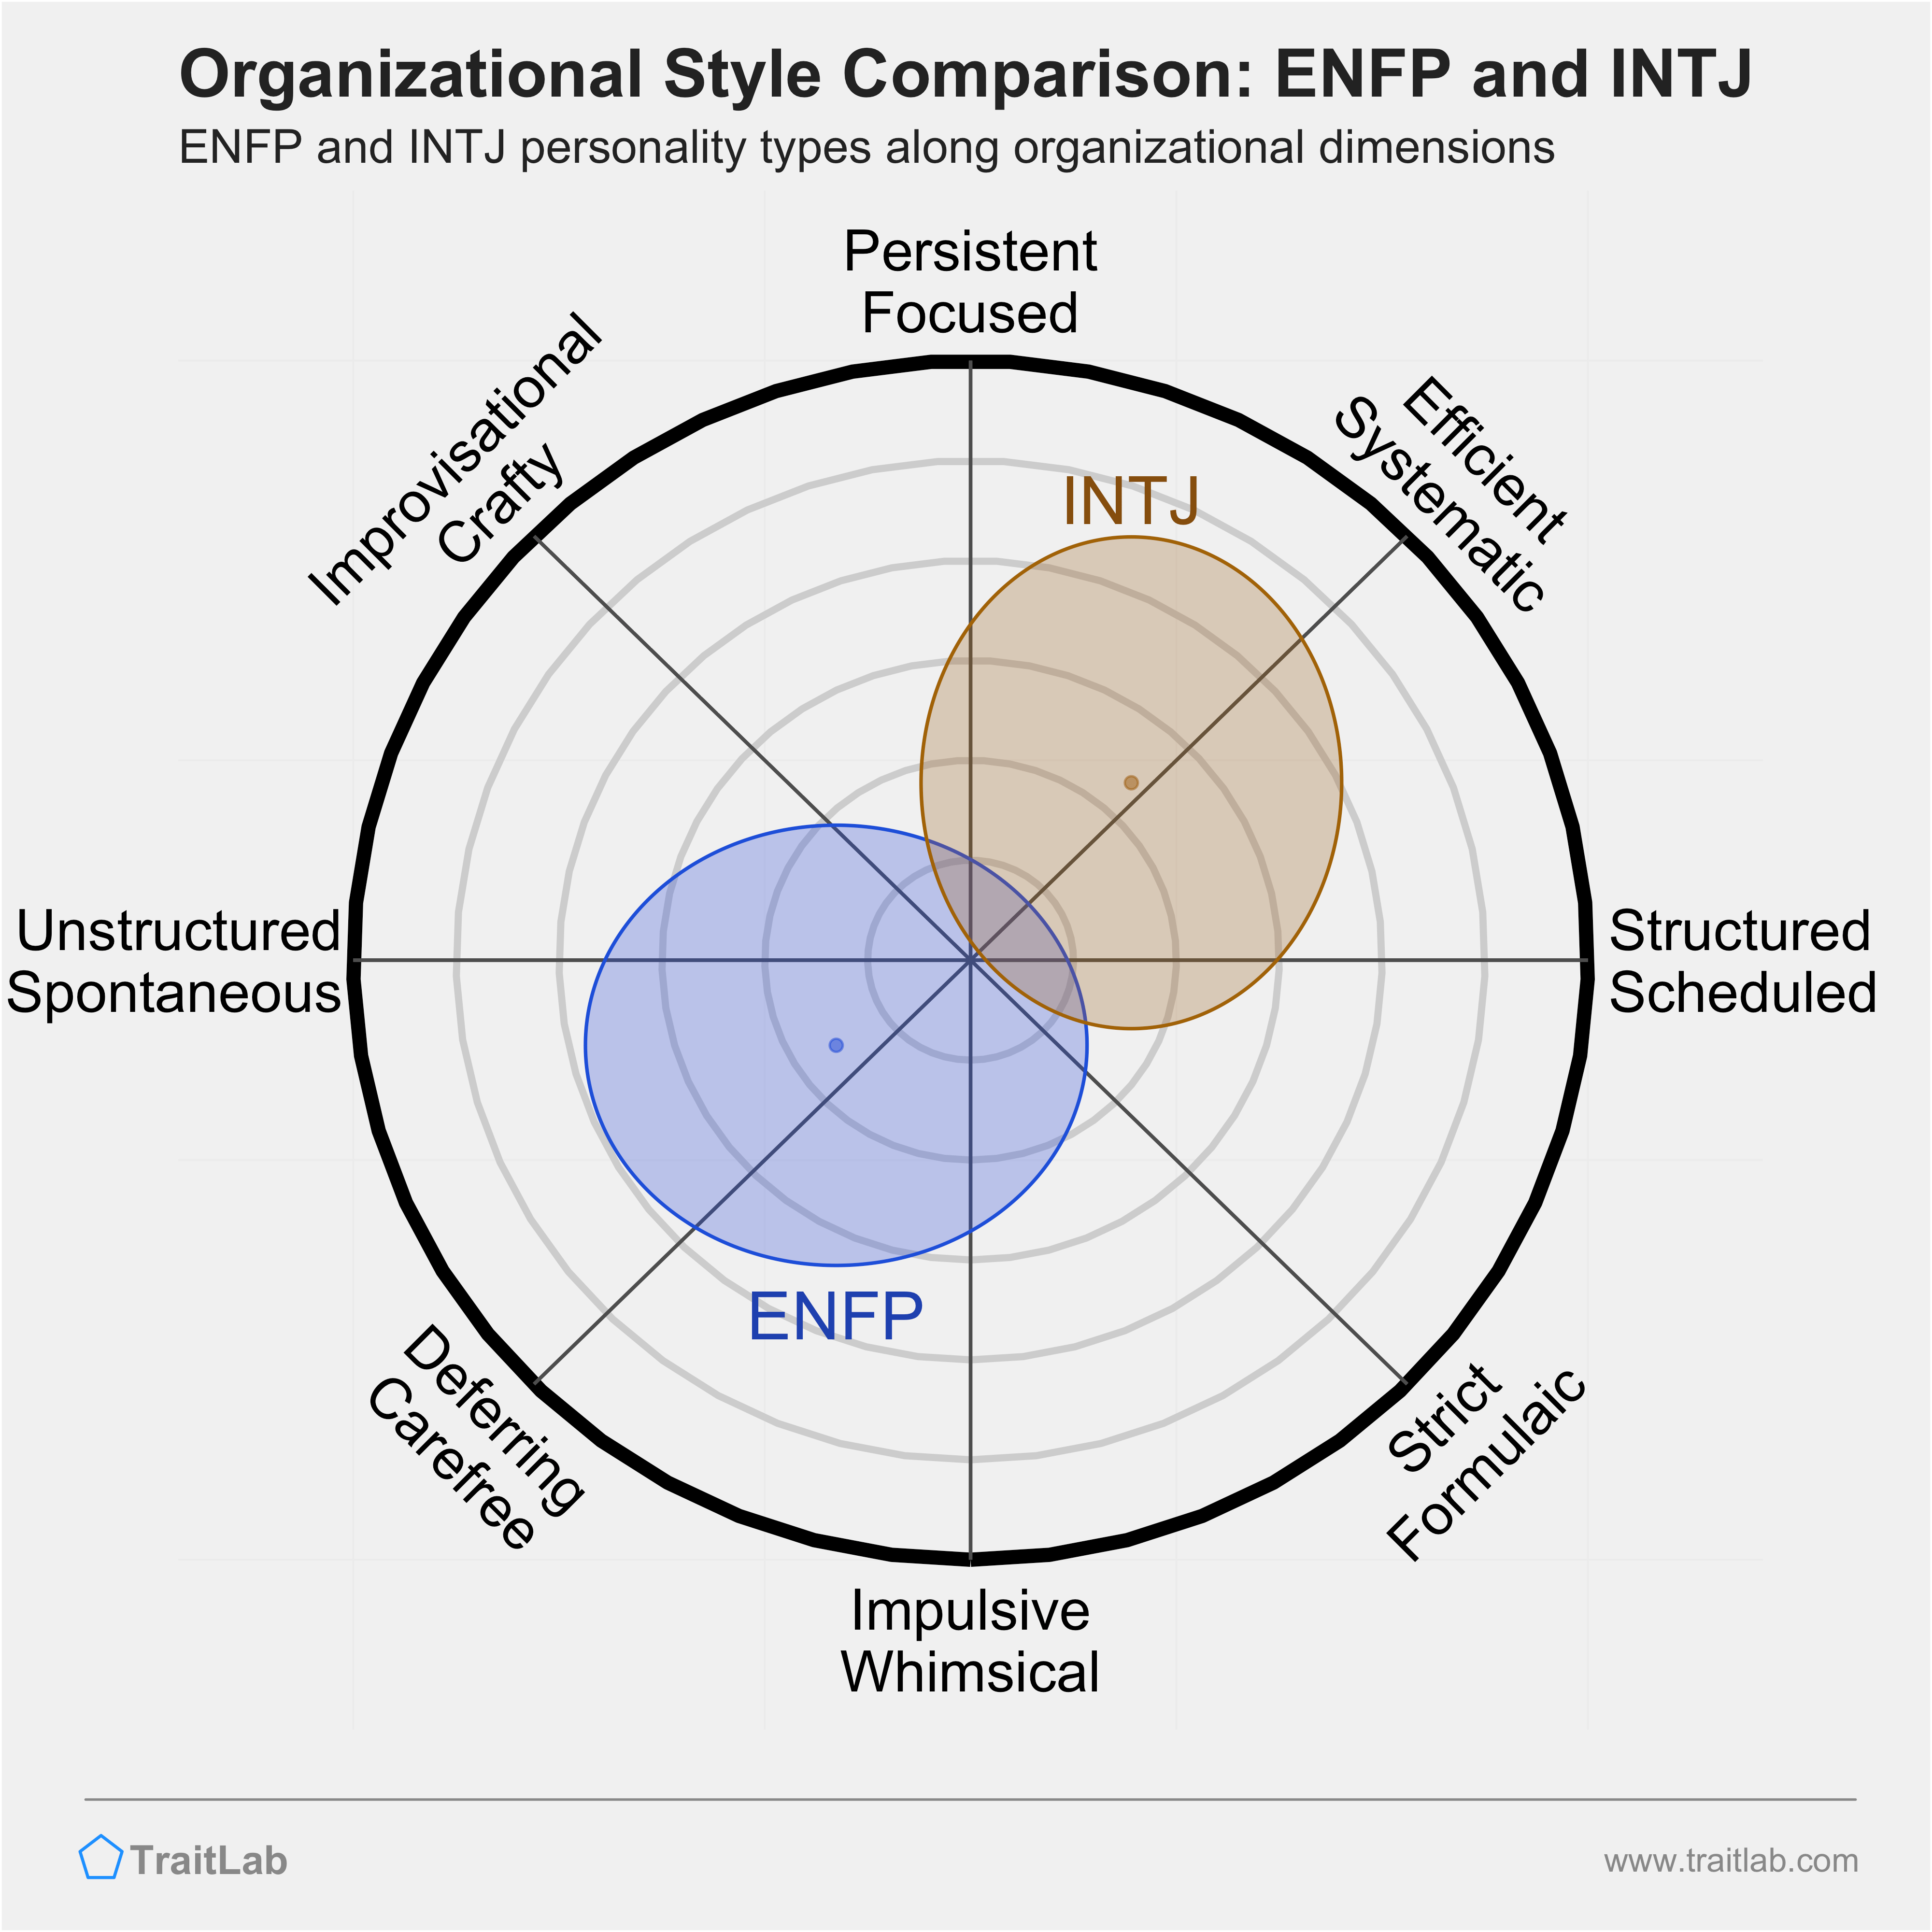 ENFP and INTJ comparison across organizational dimensions